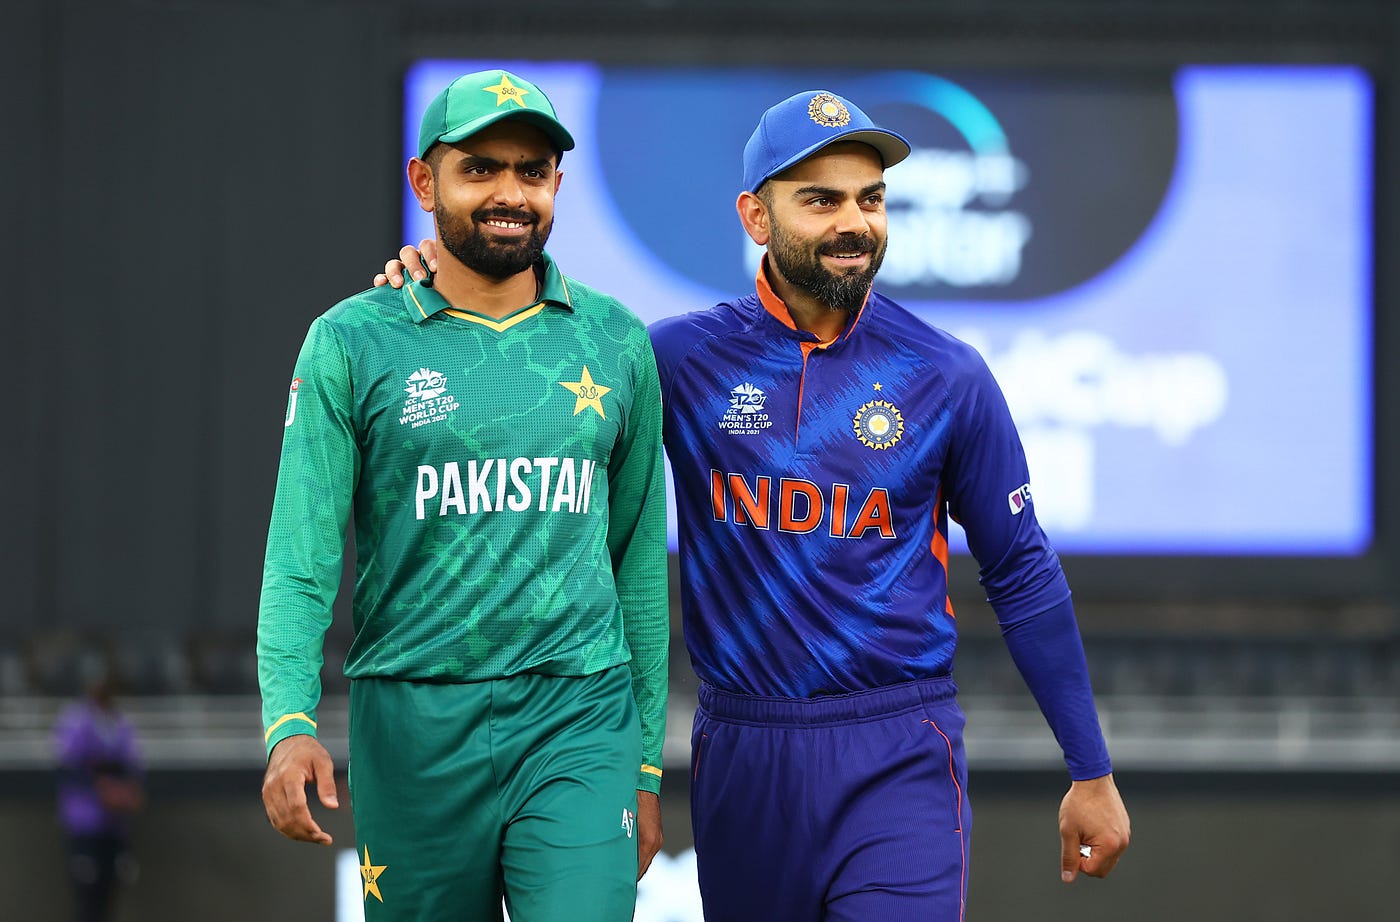 Its Pakistan vs India